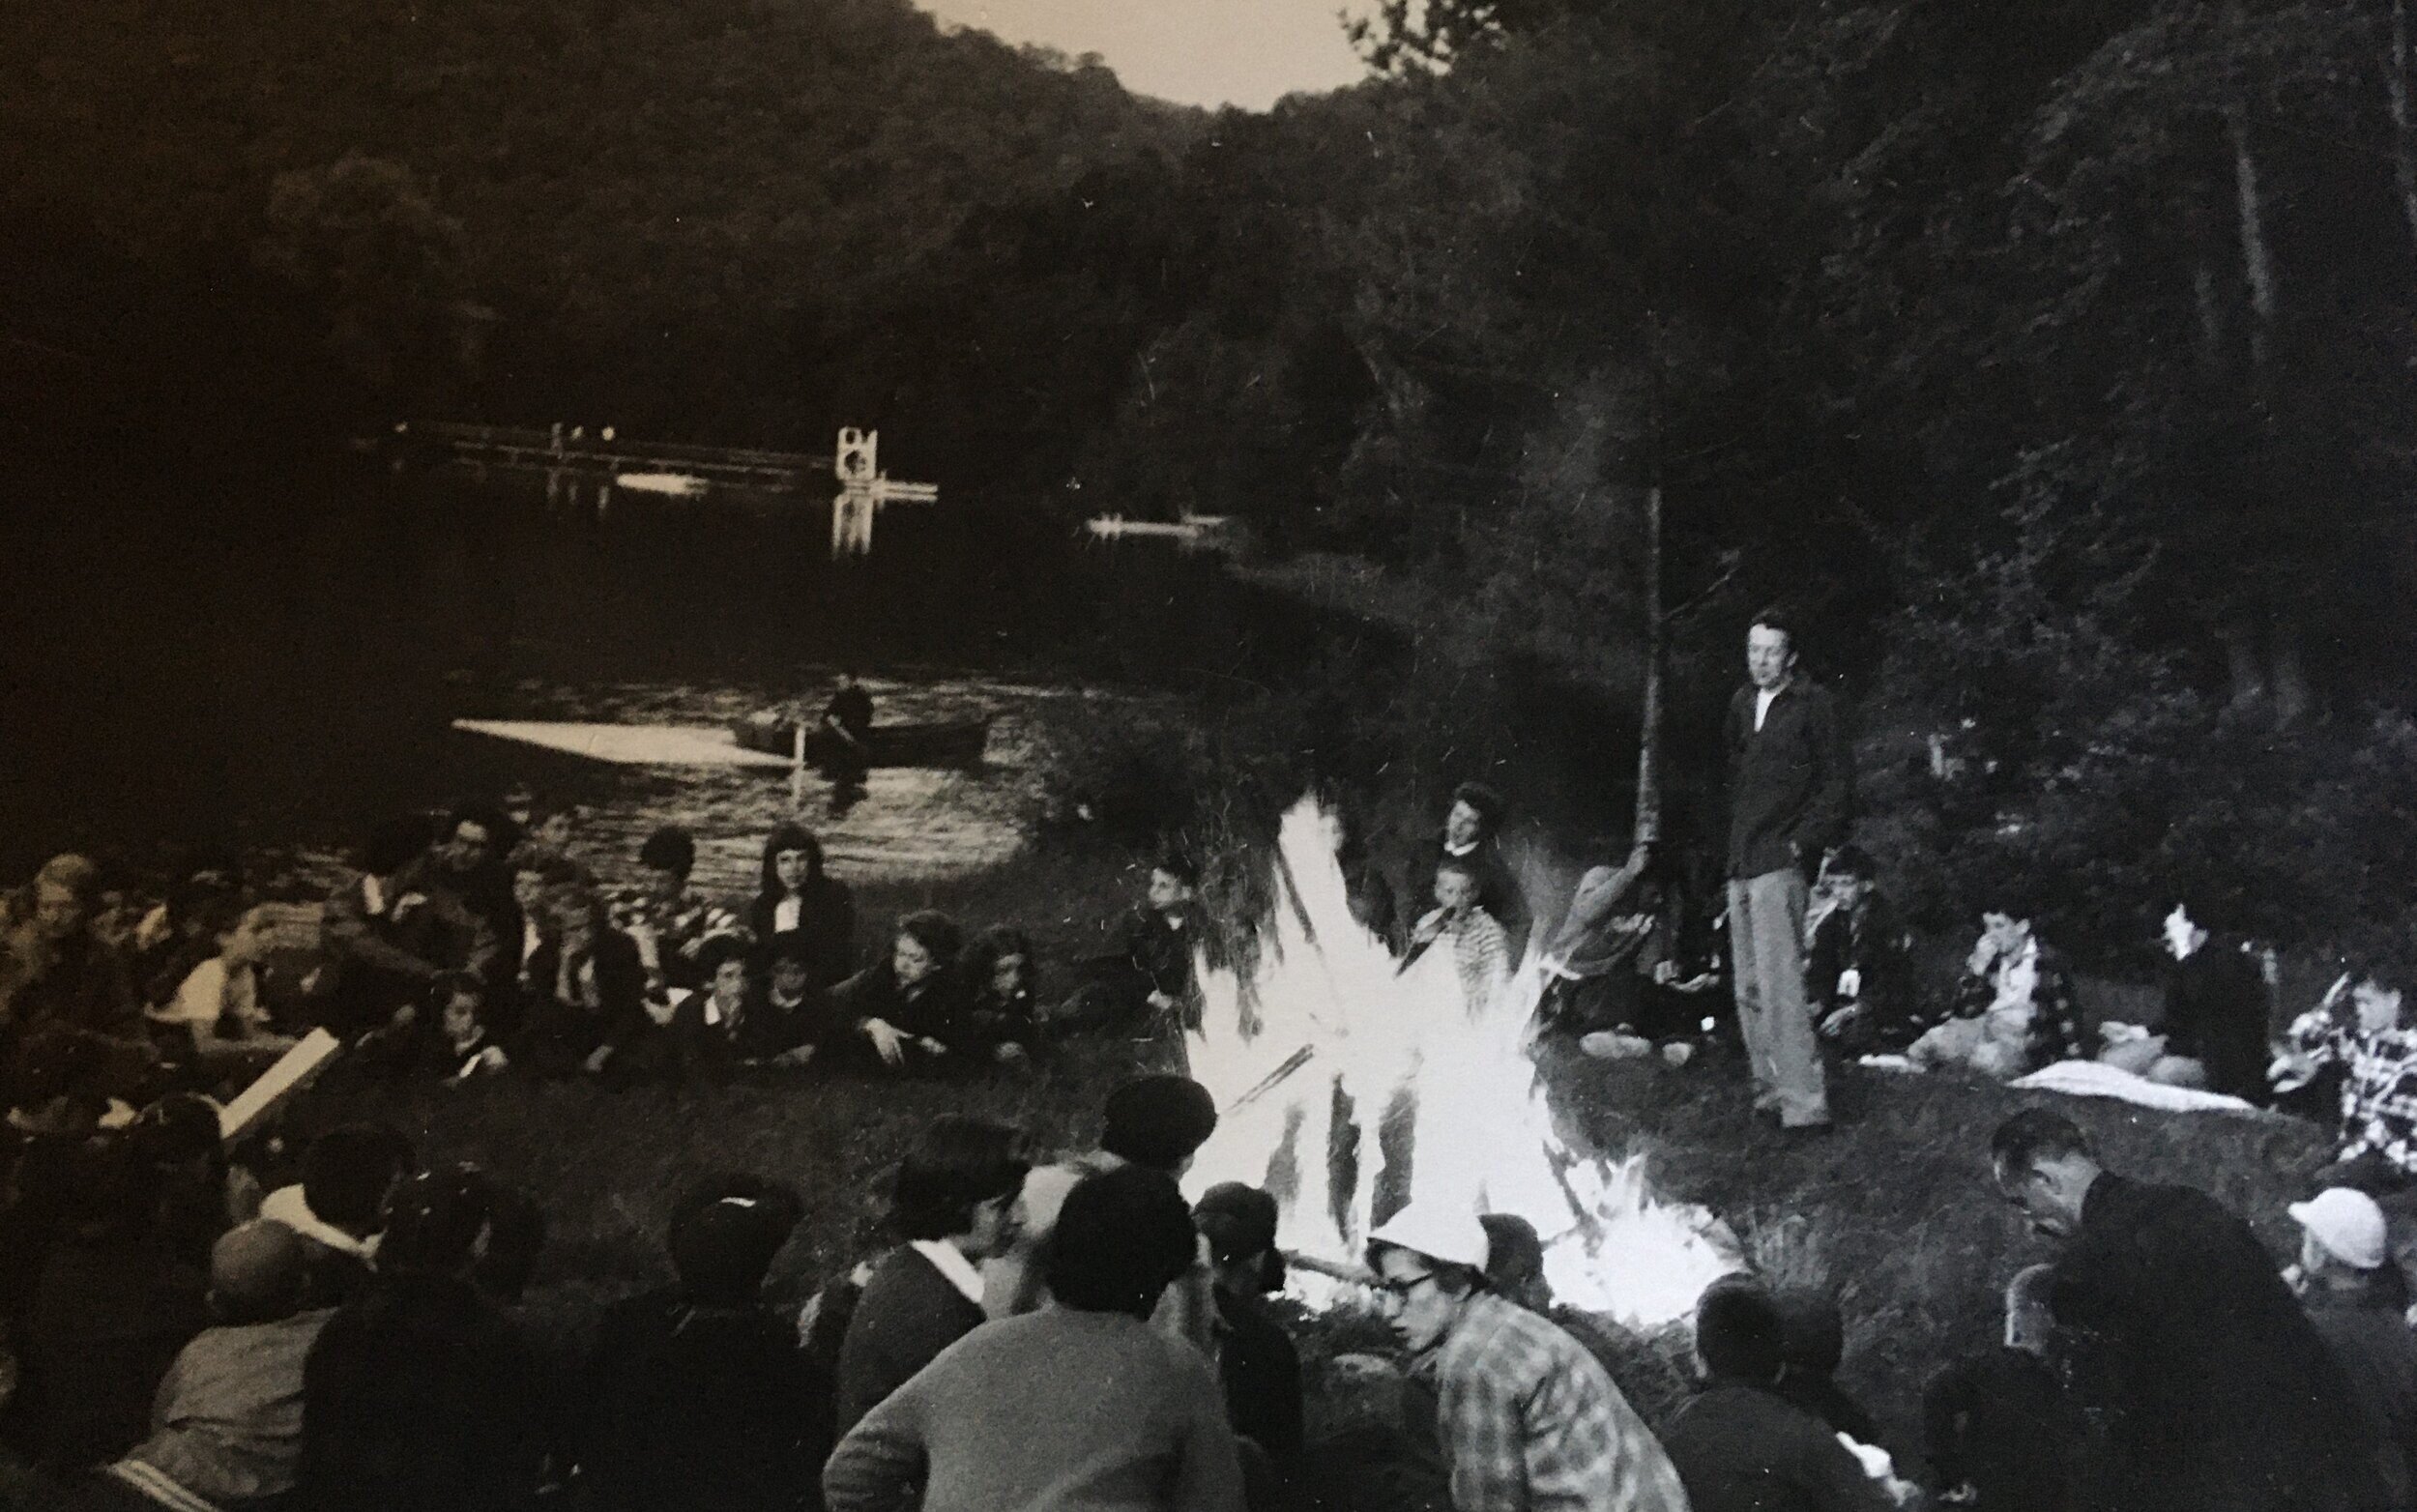 John Seeger at the campfire